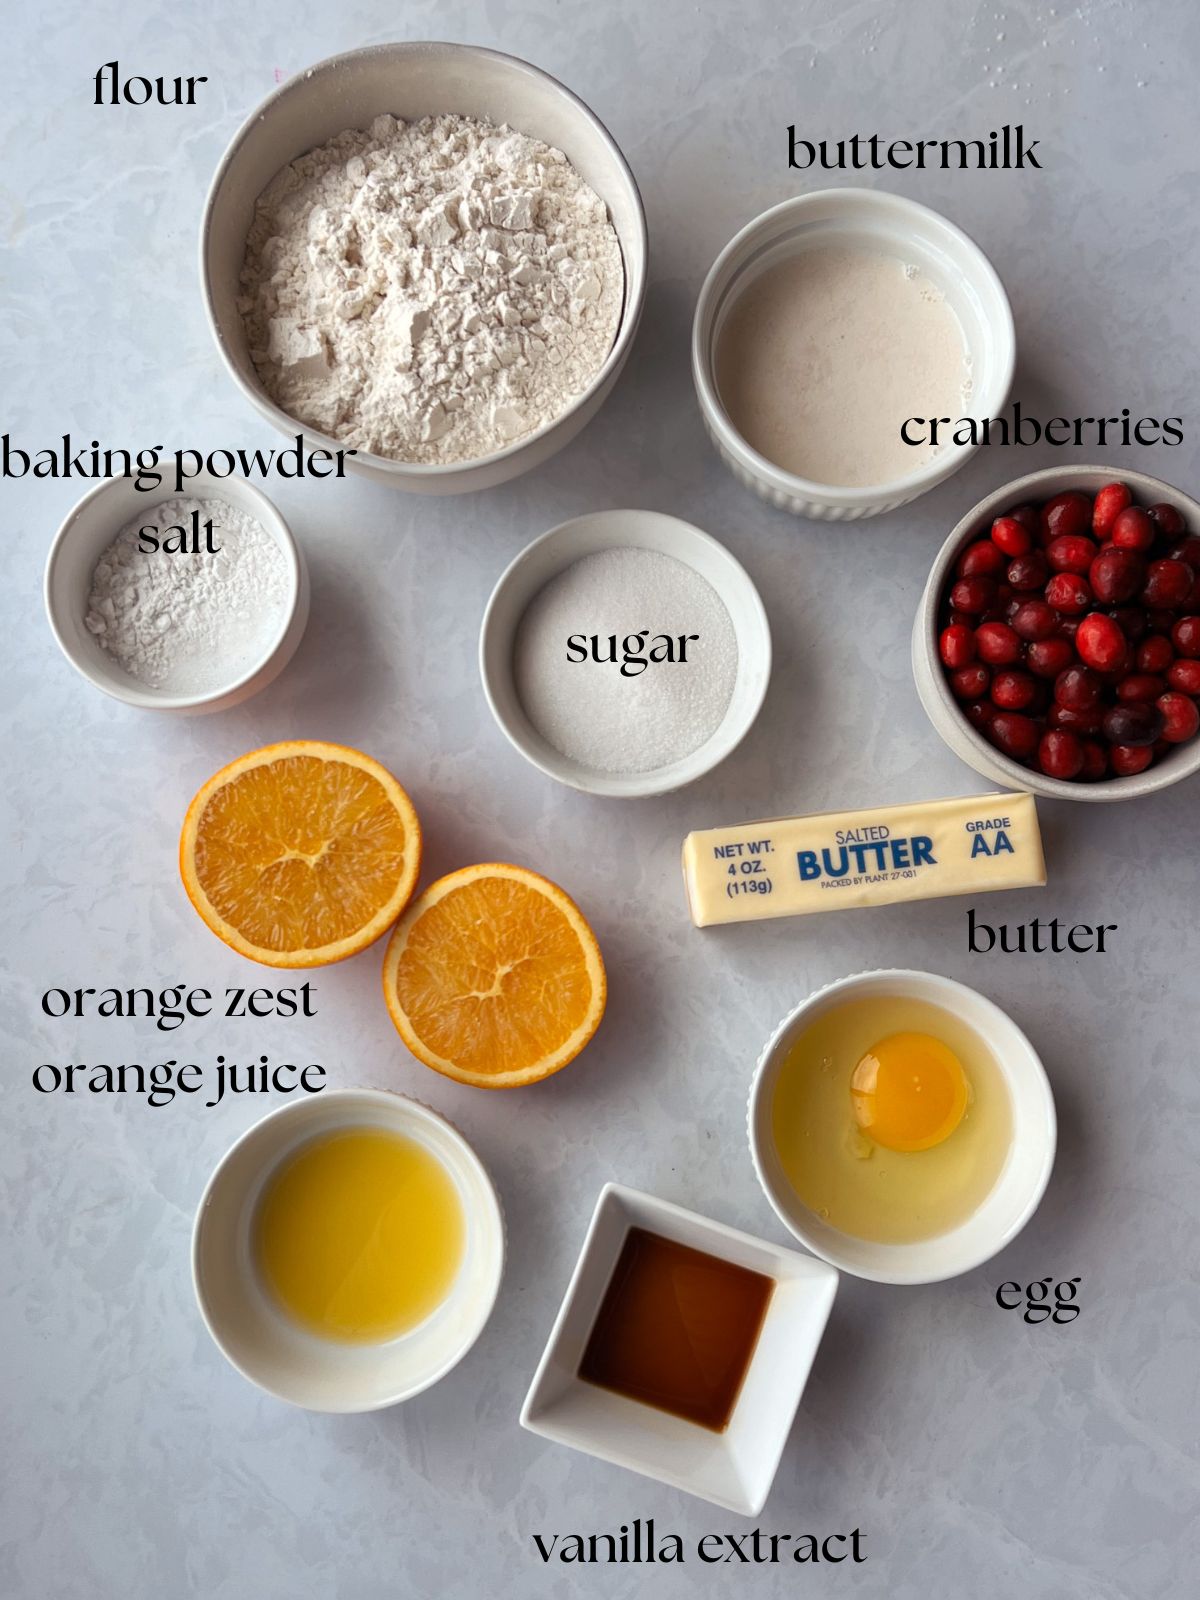 Ingredients for the orange cranberry scones: flour, buttermilk, cranberries, baking powder, salt, sugar, butter, orange zest, orange juice, egg, vanilla extract. 